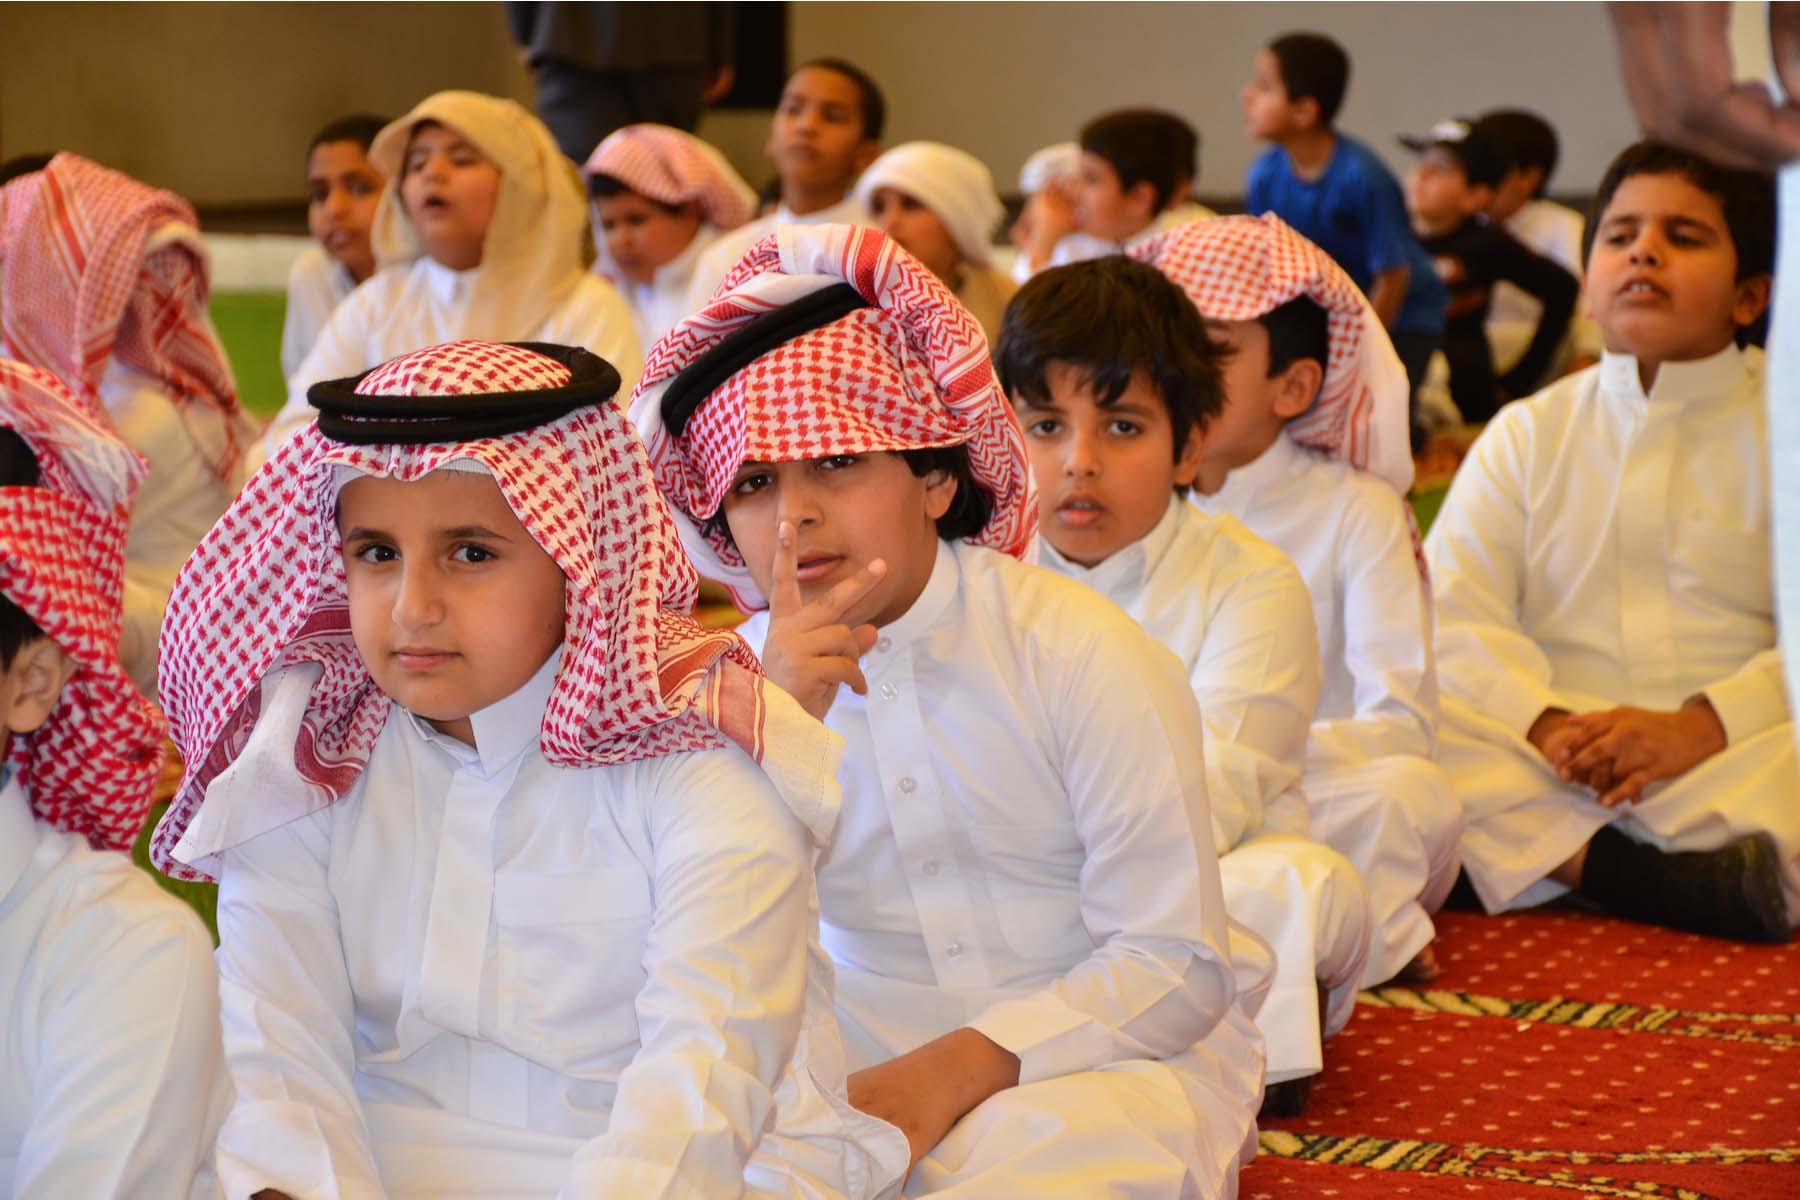 group of schoolchildren in Saudi Arabia